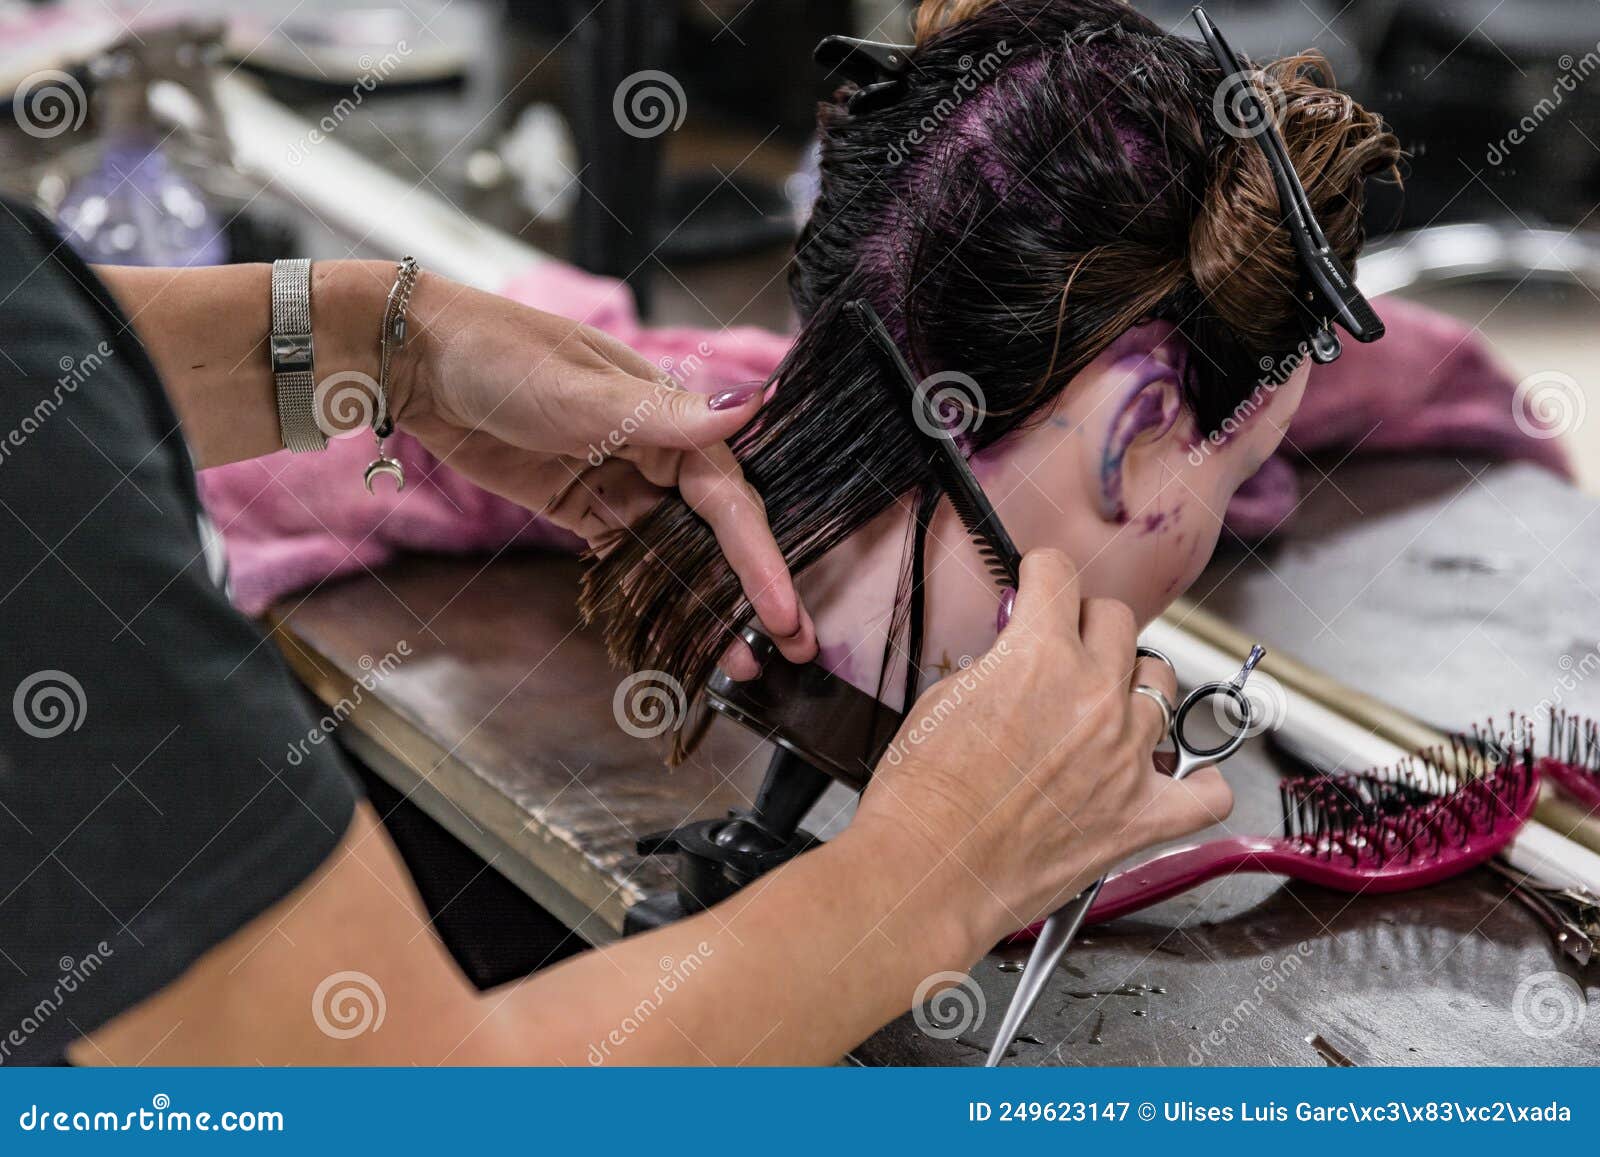 professional hairdressing training academy